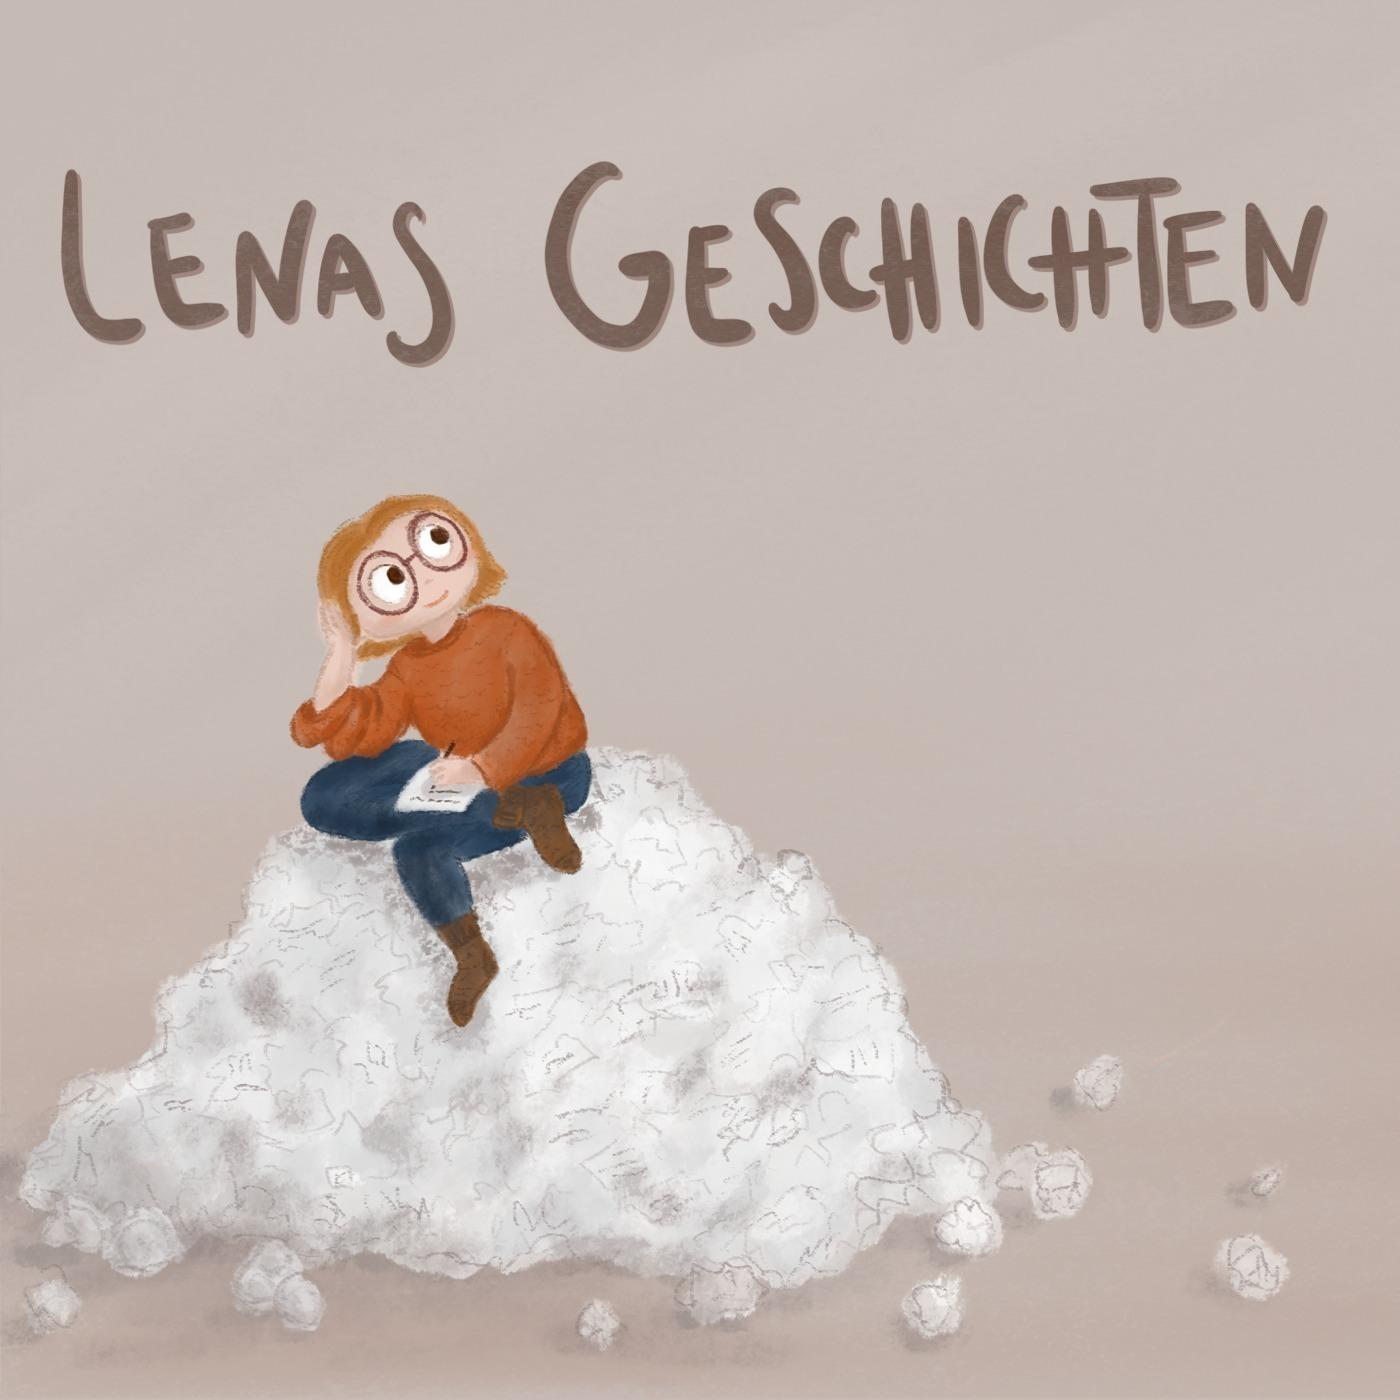 Lenas Geschichten